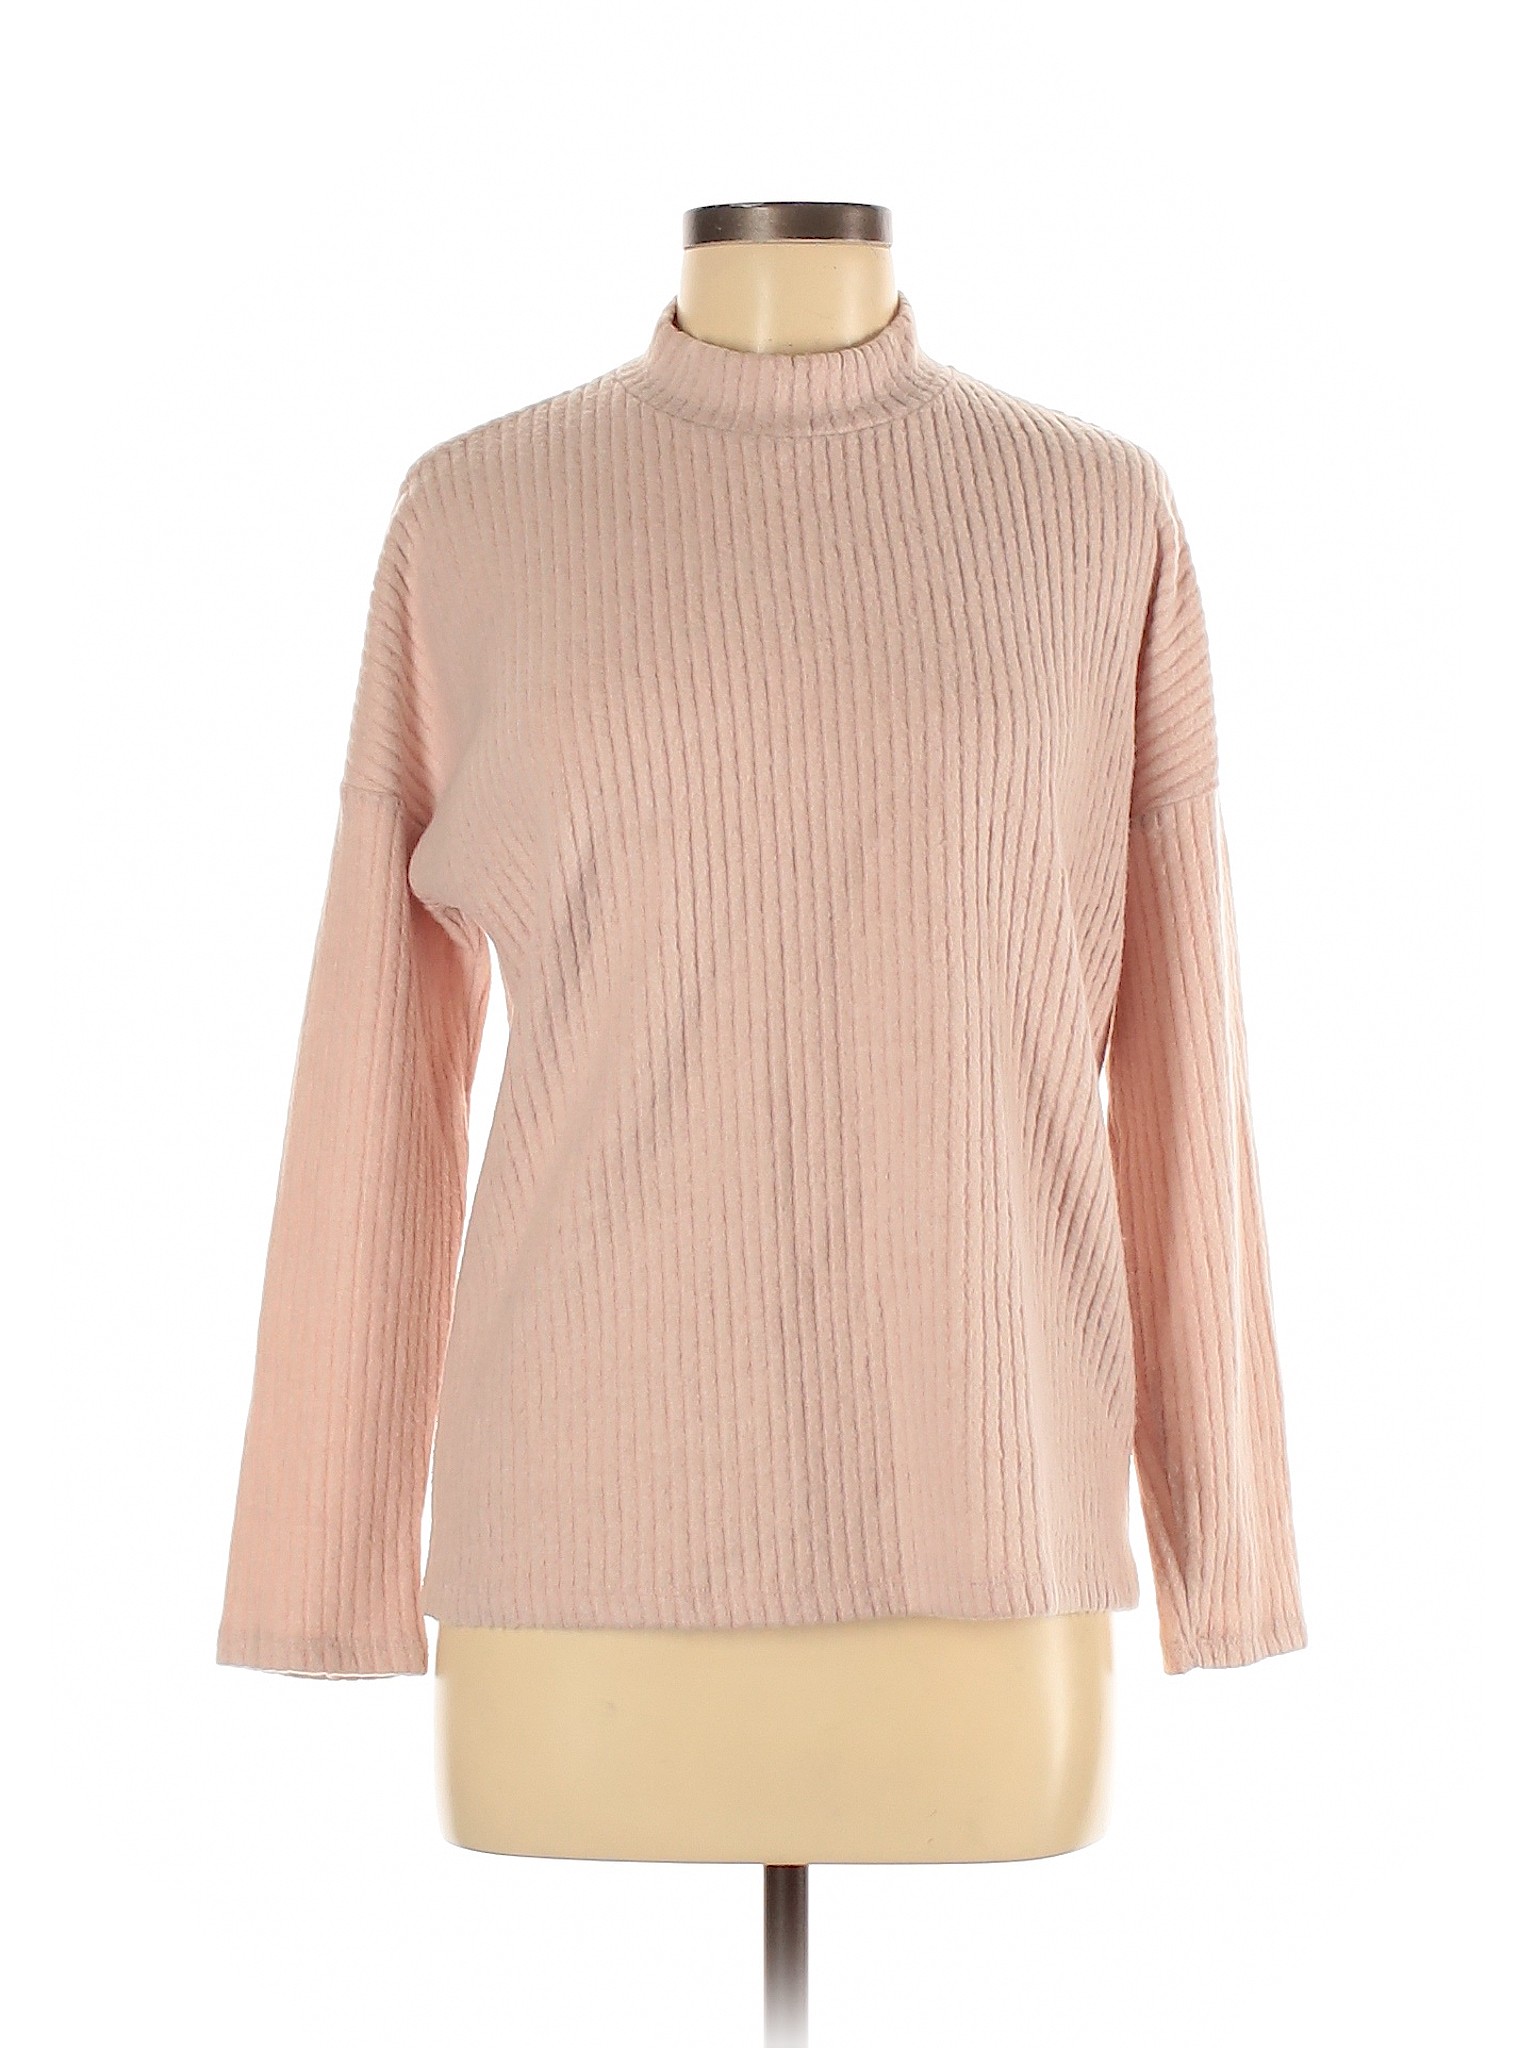 Tresics Women Pink Pullover Sweater M | eBay